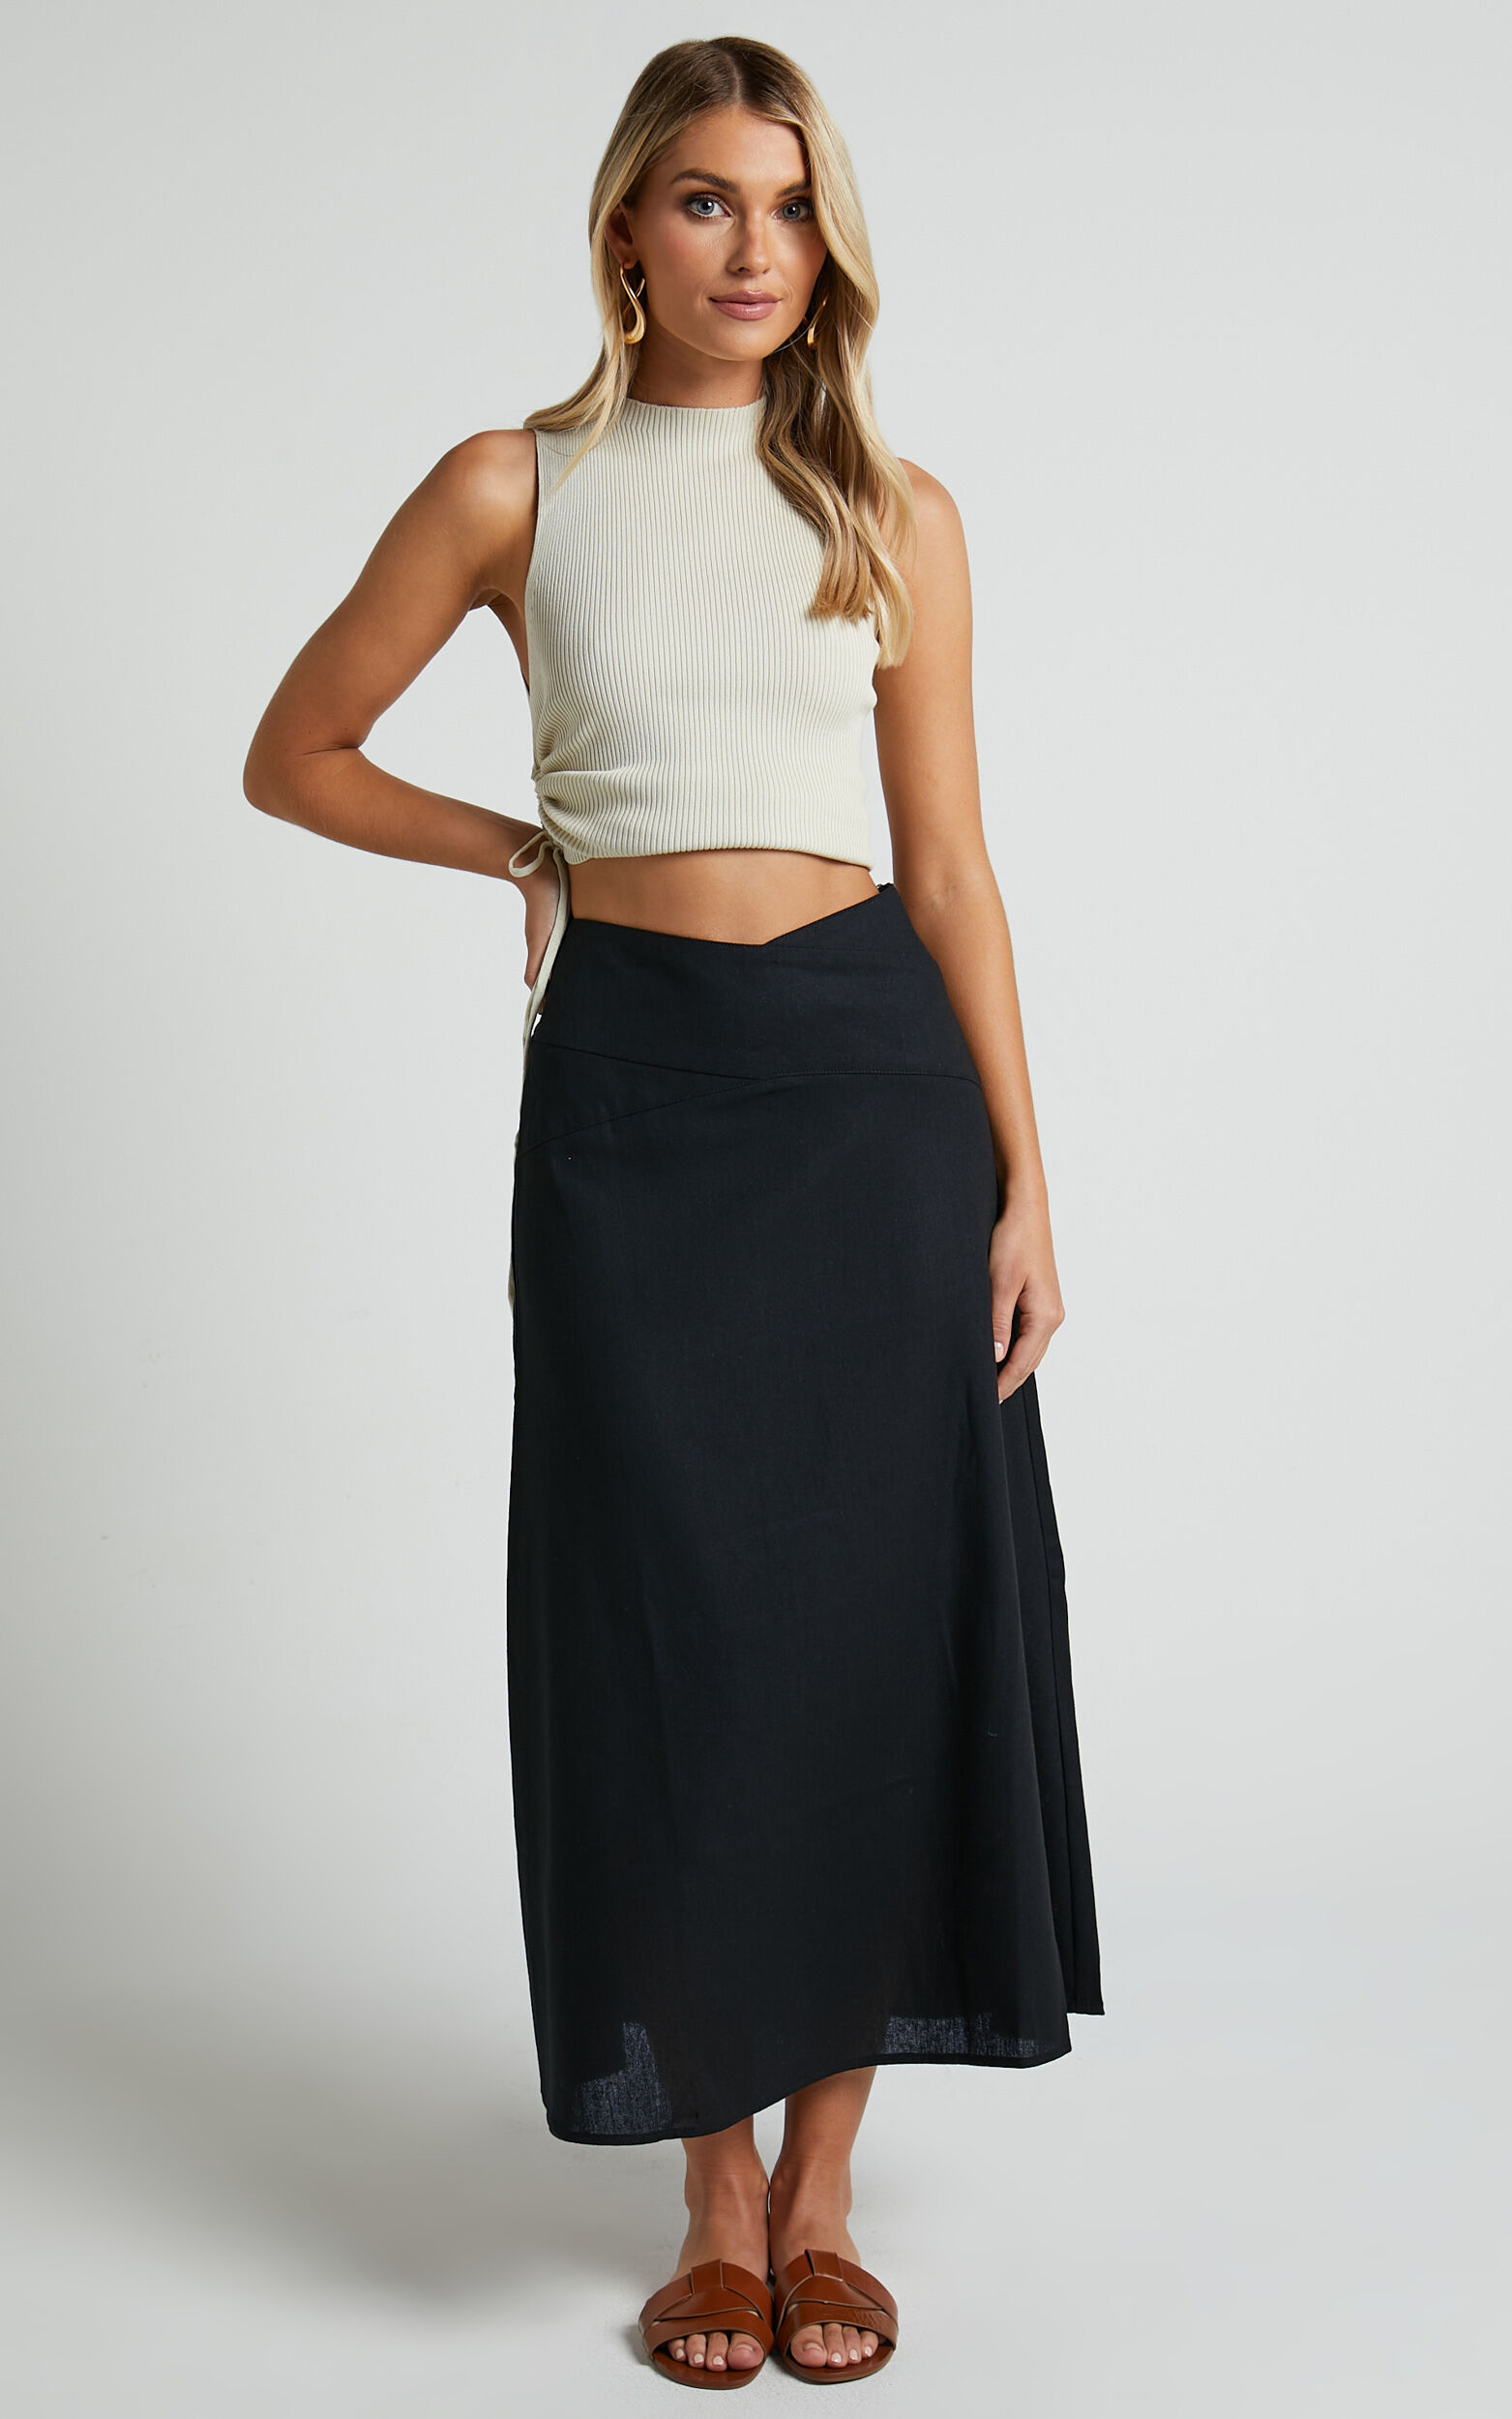 Sundry Midaxi Skirt - High Waisted Cross Front Detail Skirt in Black - 06, BLK1